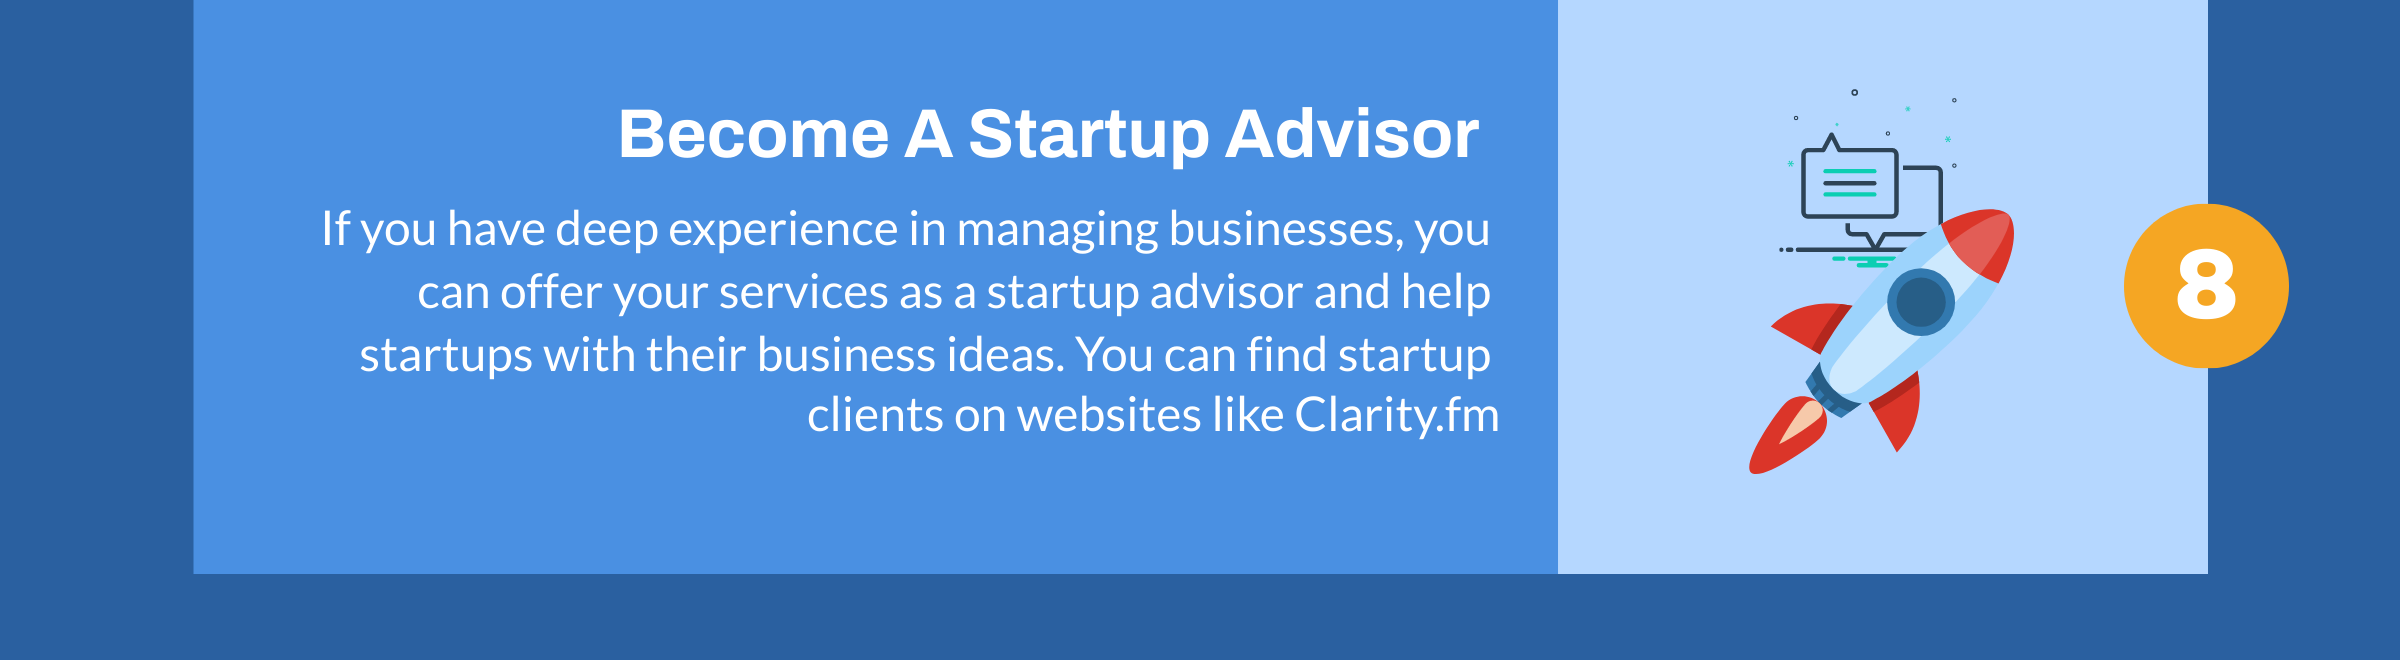 Become Startup Advisor